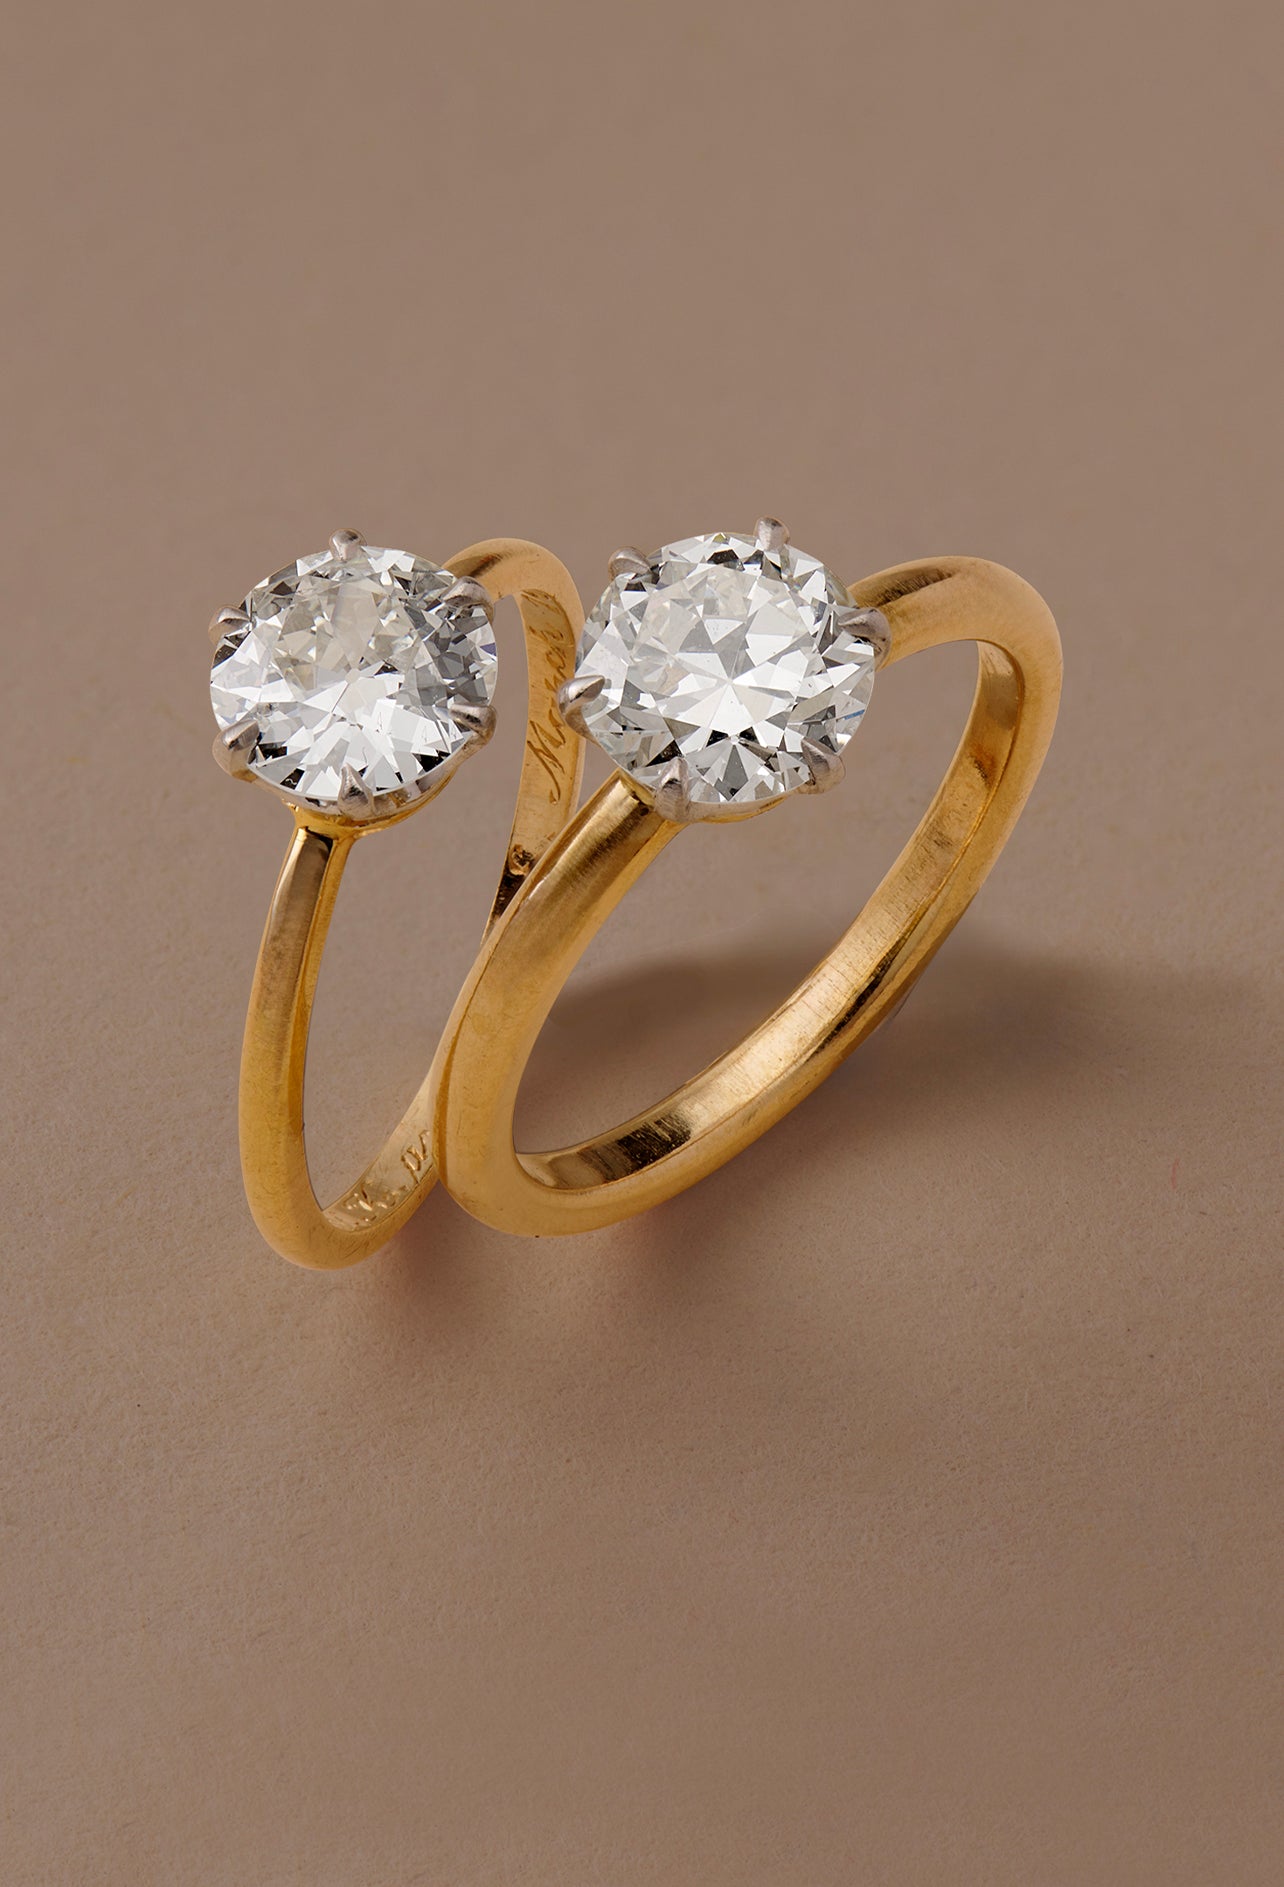 Tiffany Engagement Rings: Fantastic Ring Ideas | Tiffany engagement, Tiffany  engagement ring, Heart engagement rings